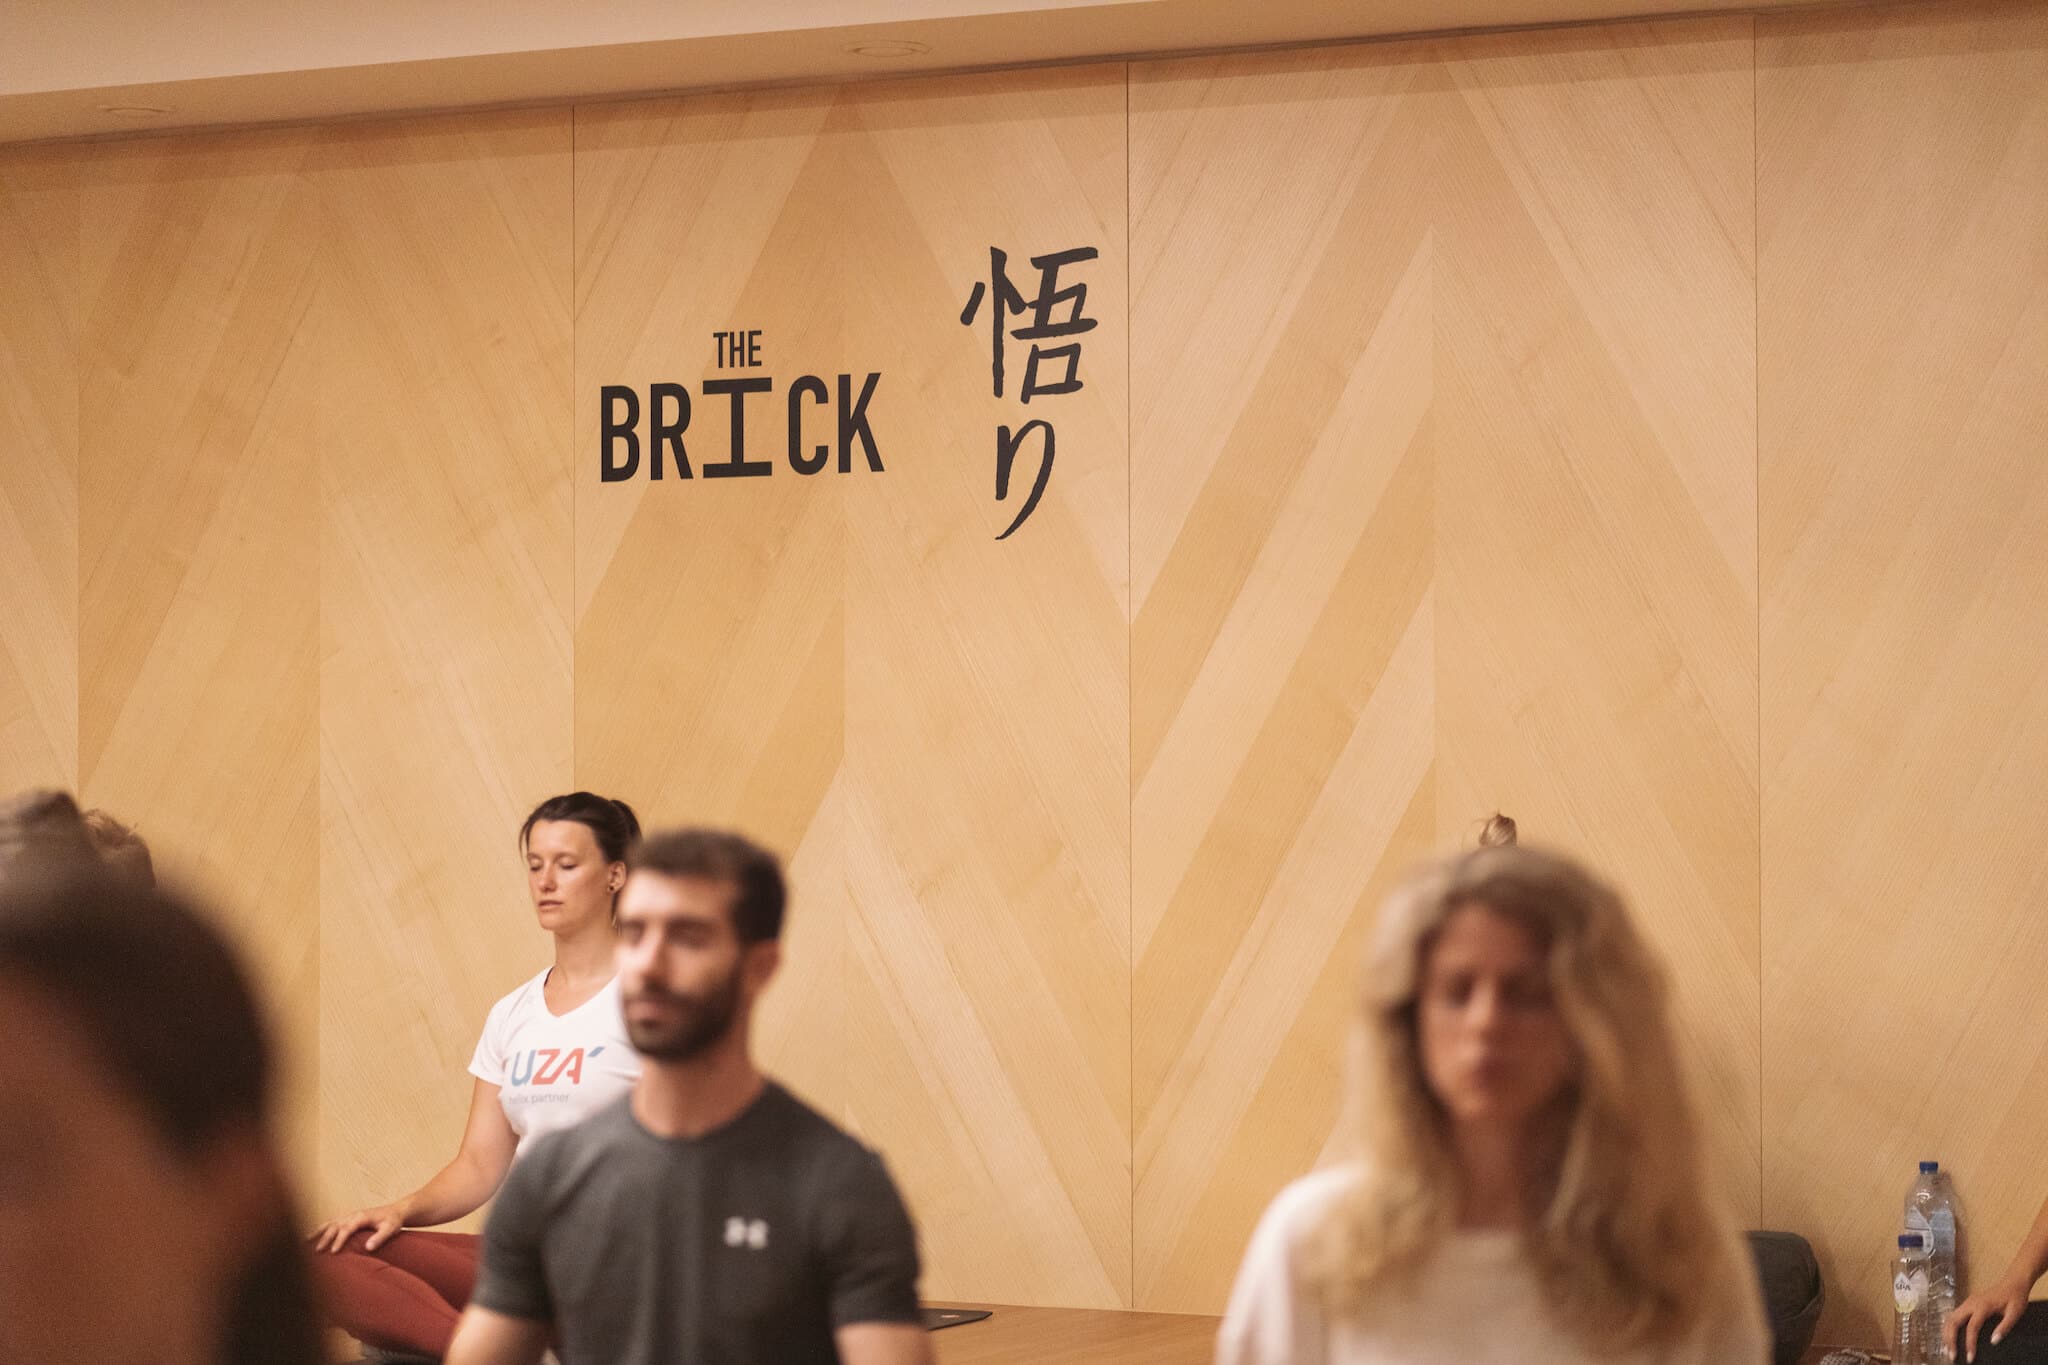 Hot restorative yoga - The Brick Satori